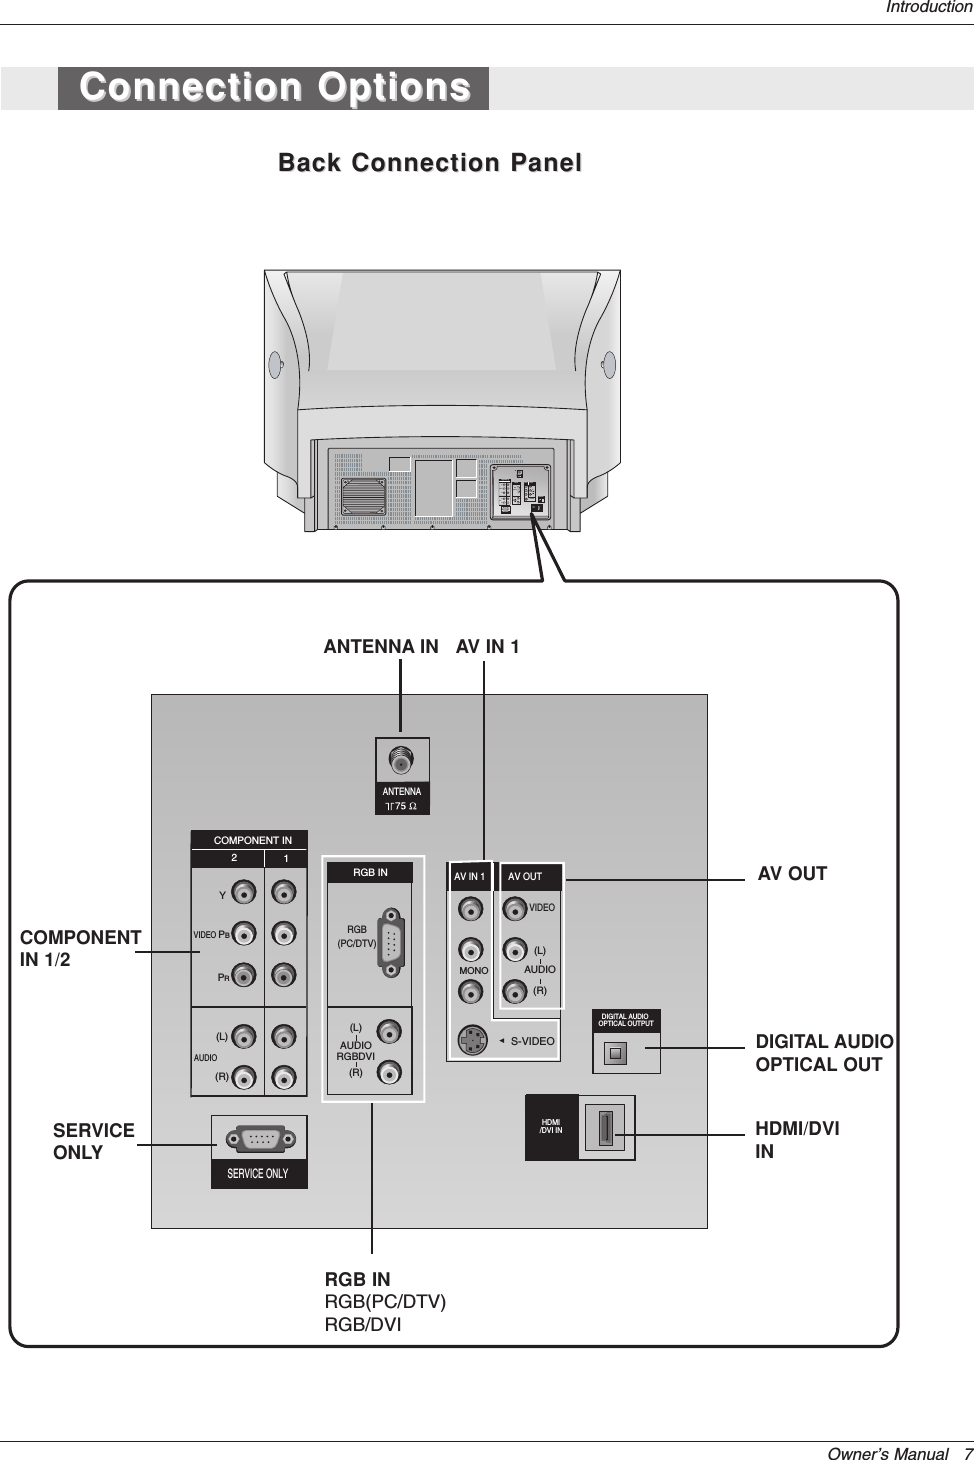 Owner’s Manual   7IntroductionRGB(PC/DTV)S-VIDEOPR PBYMONORGB INCOMPONENT IN21(L)(R)AUDIORGBDVI(L)(R)AUDIOVIDEO(L)(R)AV IN 1 AV OUTDIGITAL AUDIO OPTICAL OUTPUTANTENNASERVICE ONLYVIDEOAUDIOHDMI/DVI INRGB(PC/DTV)S-VIDEOPR PBYMONORGB INCOMPONENT IN21(L)(R)AUDIORGBDVI(L)(R)AUDIOVIDEO(L)(R)AV IN 1 AV OUTDIGITAL AUDIO OPTICAL OUTPUTANTENNASERVICE ONLYVIDEOAUDIOHDMI/DVI INBack Connection PanelBack Connection PanelConnection OptionsConnection OptionsANTENNA INCOMPONENTIN 1/2SERVICEONLYHDMI/DVIINDIGITAL AUDIOOPTICAL OUTAV IN 1AV OUTRGB INRGB(PC/DTV)RGB/DVI